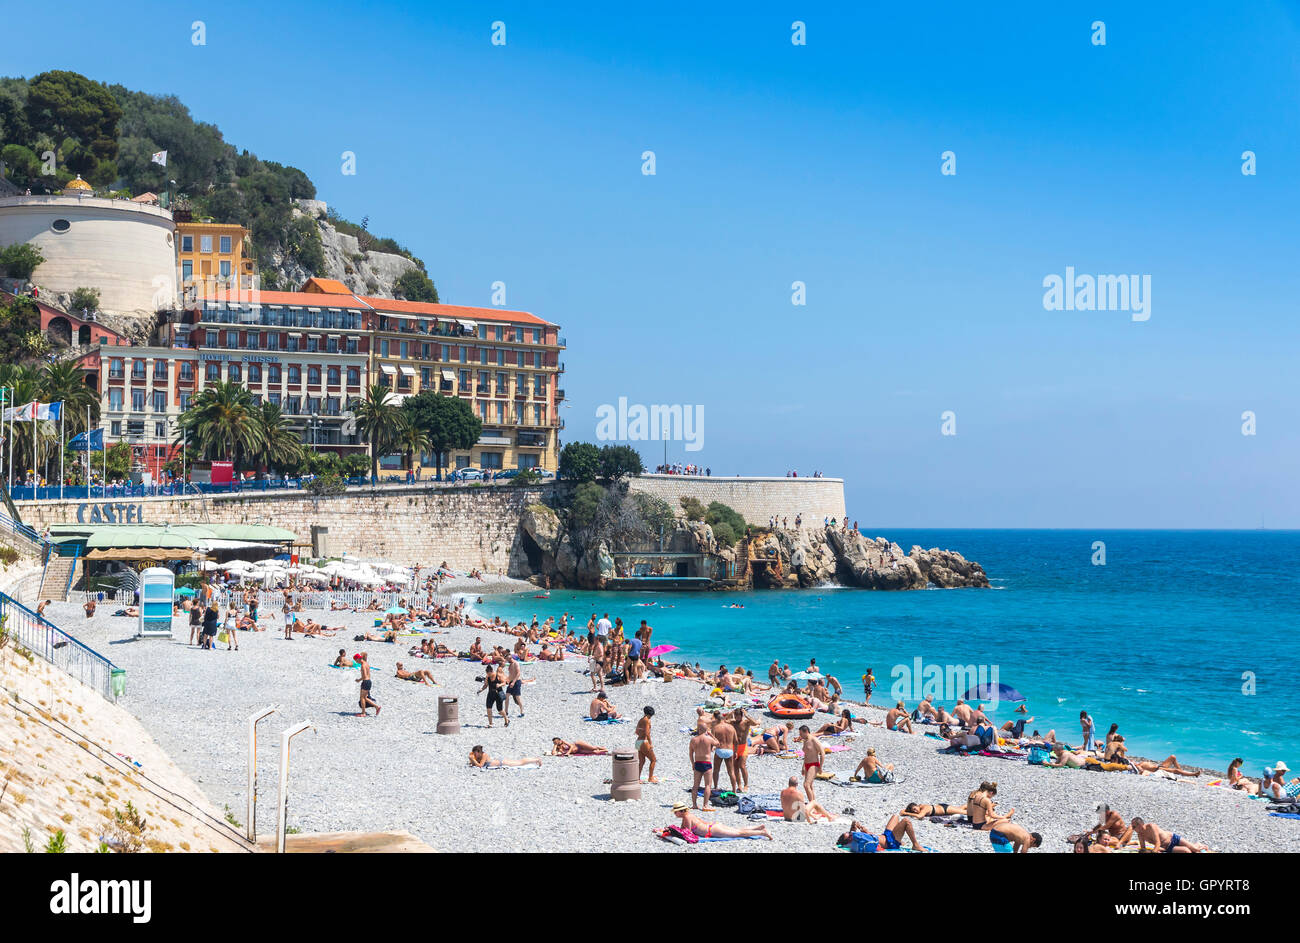 Crowded municipal beach near Promenade des Anglais in City of Nice, Cote D'azur, Mediterranean sea, France Stock Photo